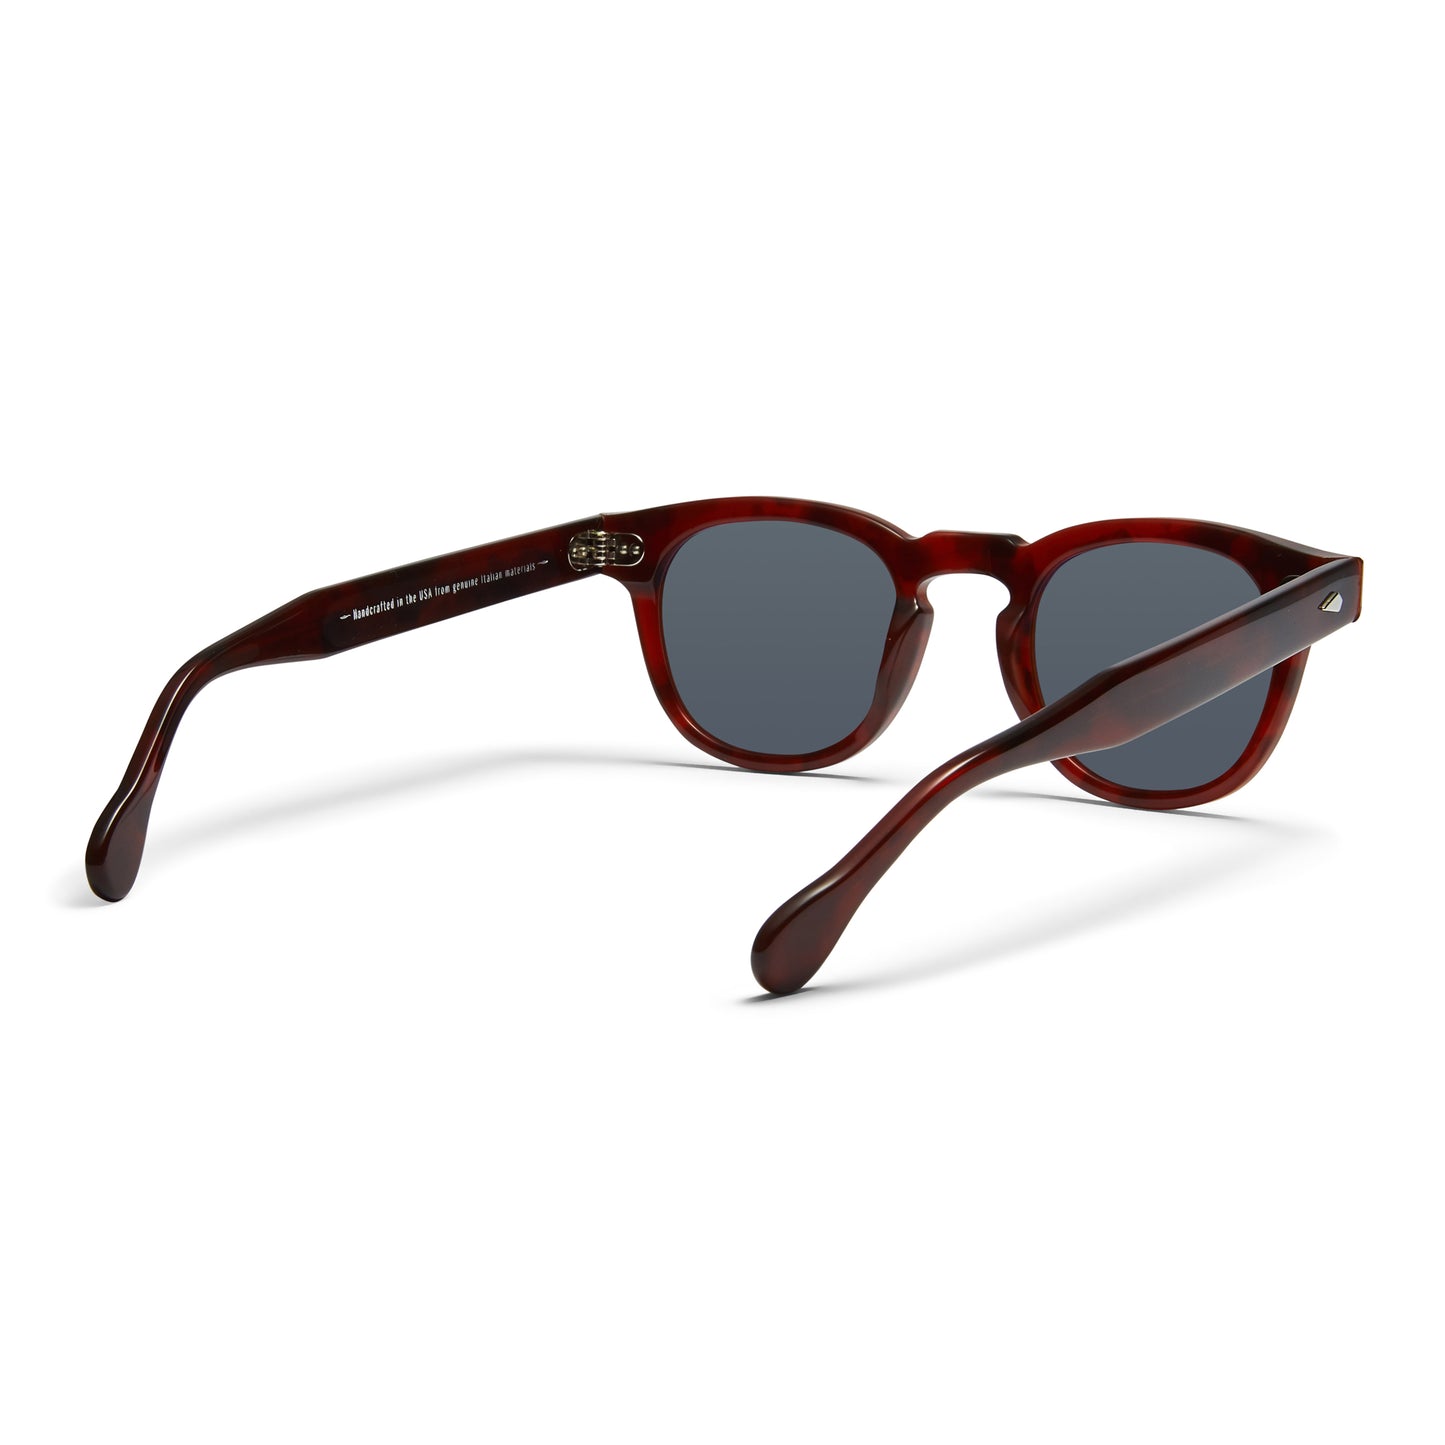 A back view of the burgundy Arnel USA sunglass frame—the Vintage eyewear. 